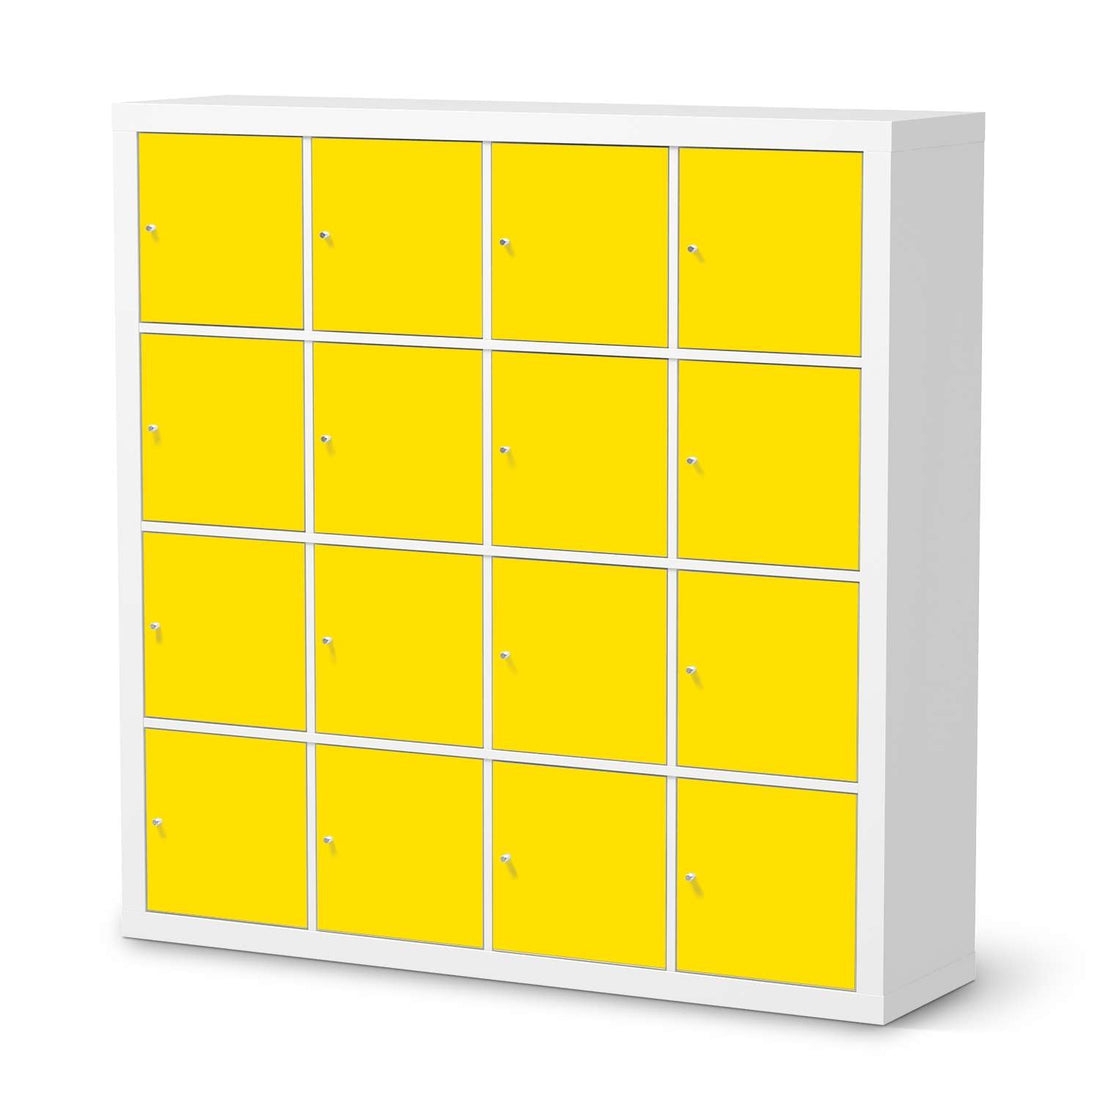 Selbstklebende Folie Gelb Dark - IKEA Expedit Regal 16 Türen  - weiss